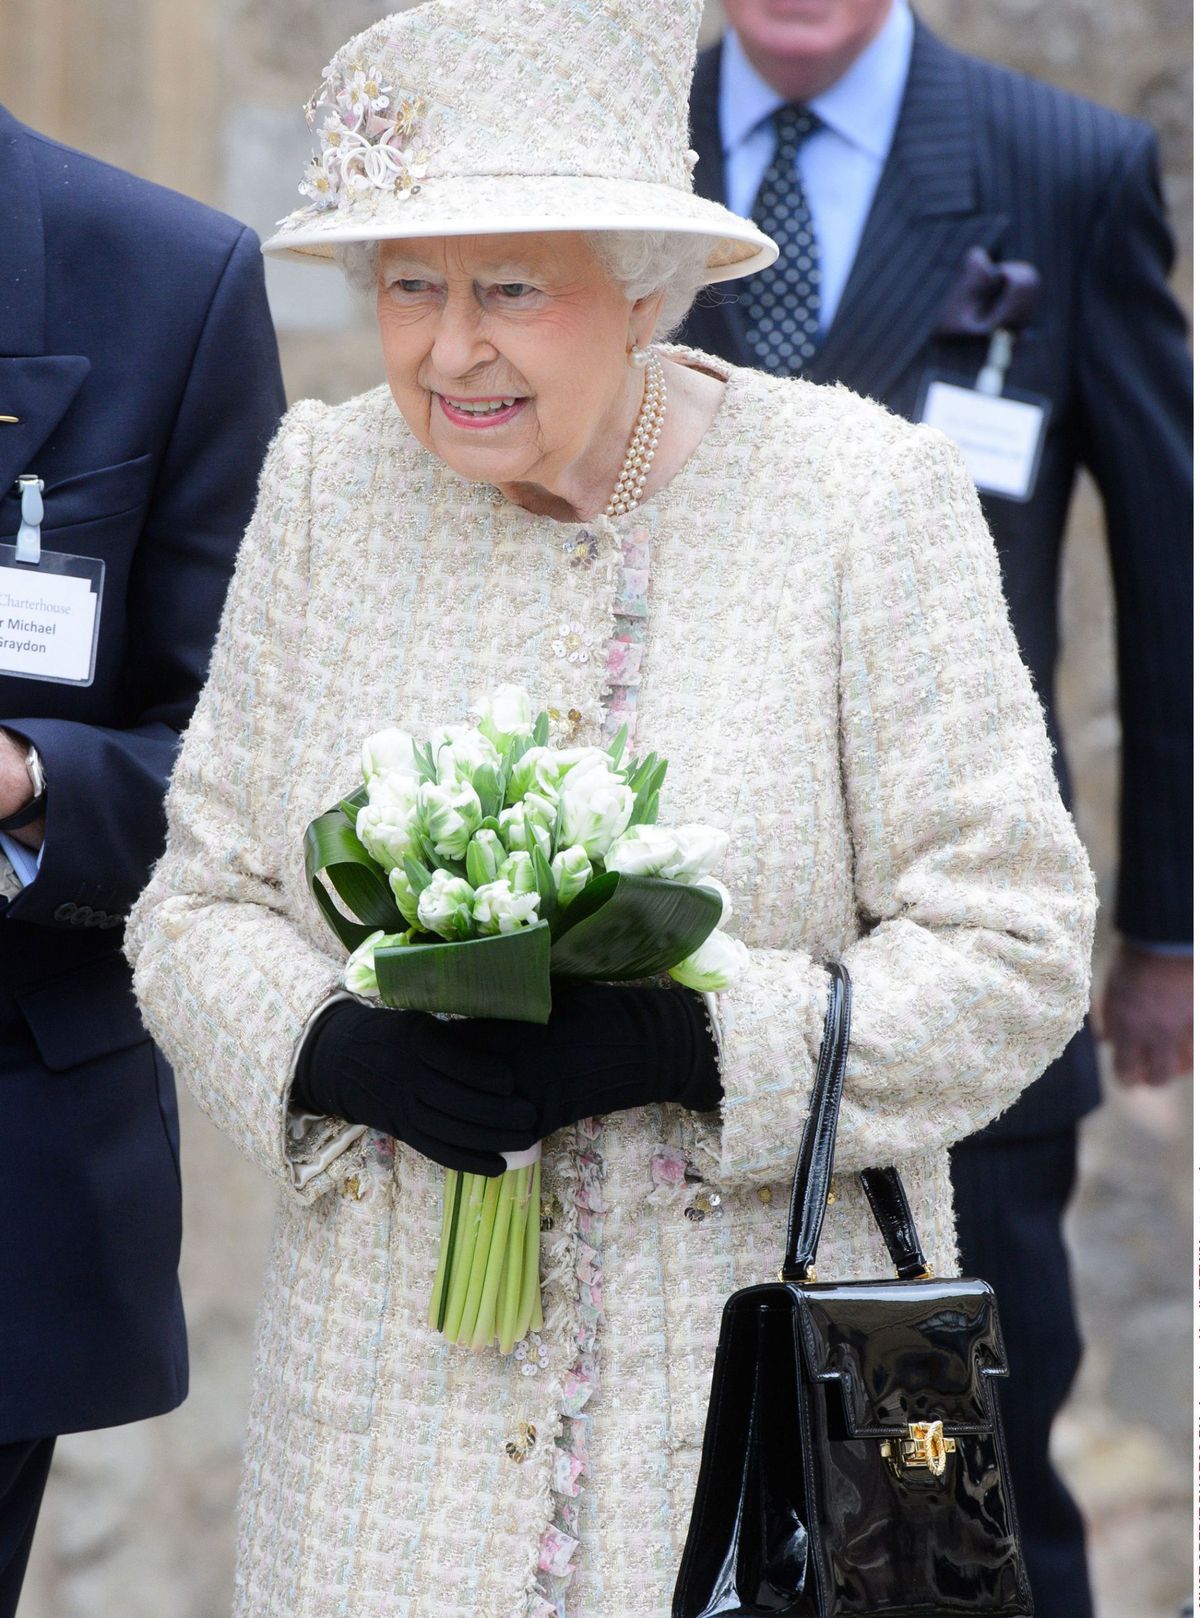 Queen's Launer Handbags A Way For Her To Send Secret Signals | Woman & Home